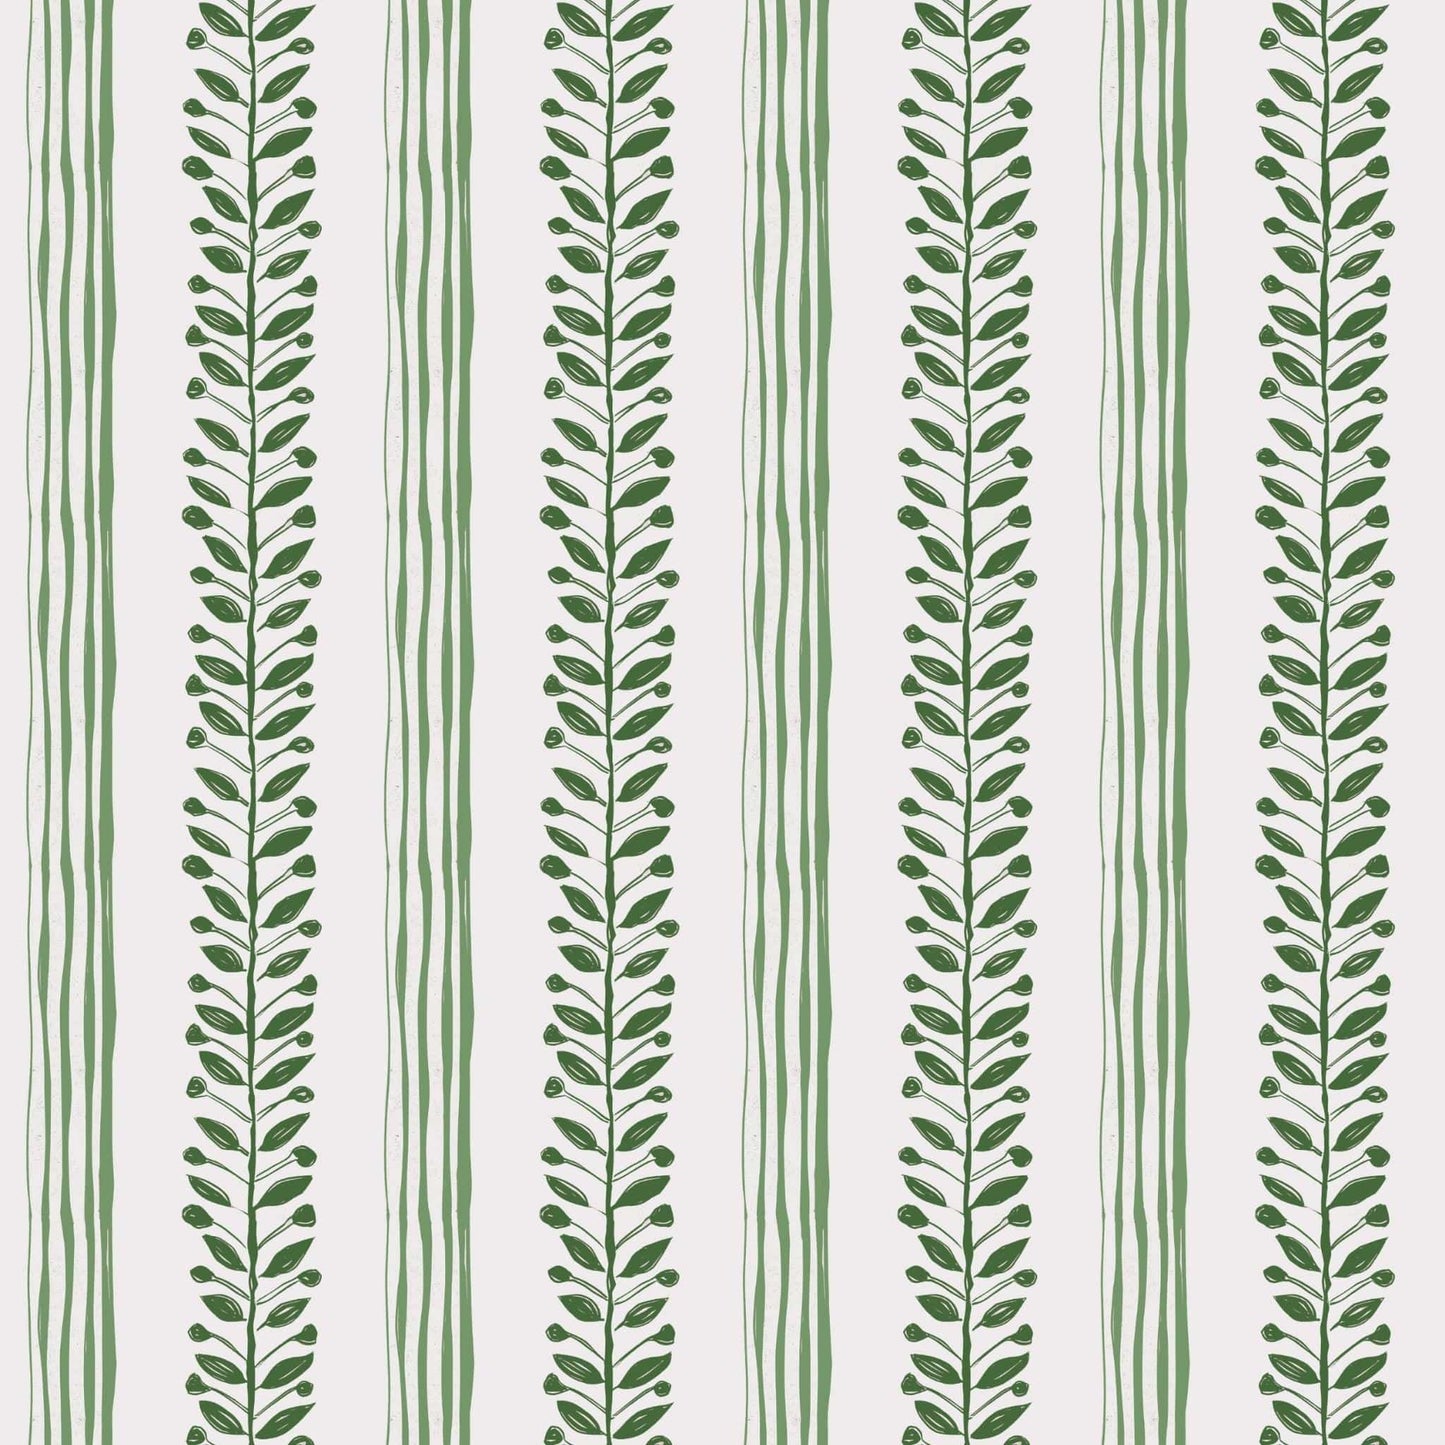 WALLPAPER ROLL Olive Wallpaper - Olive Green